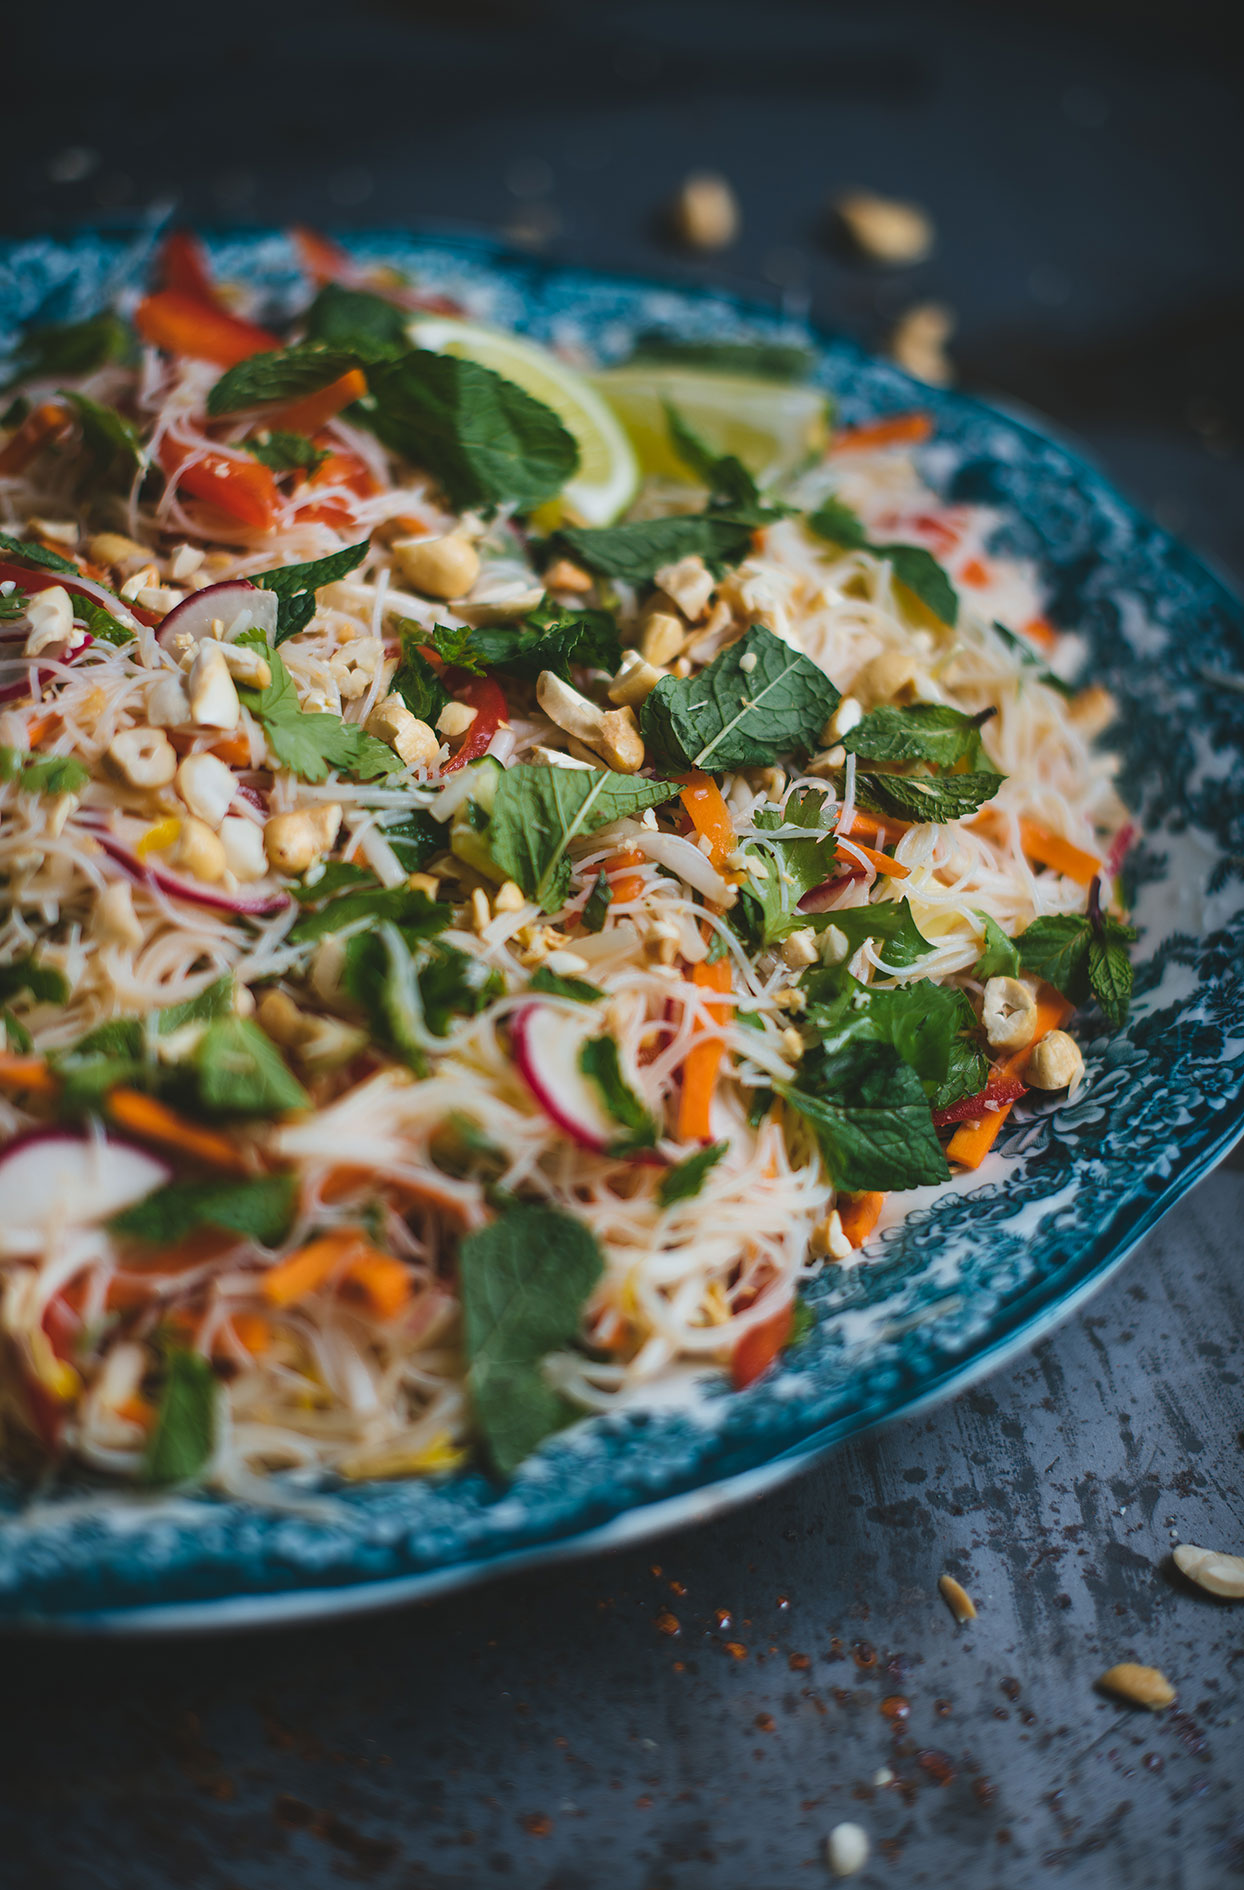 Vietnamese style rice vermicelli salad